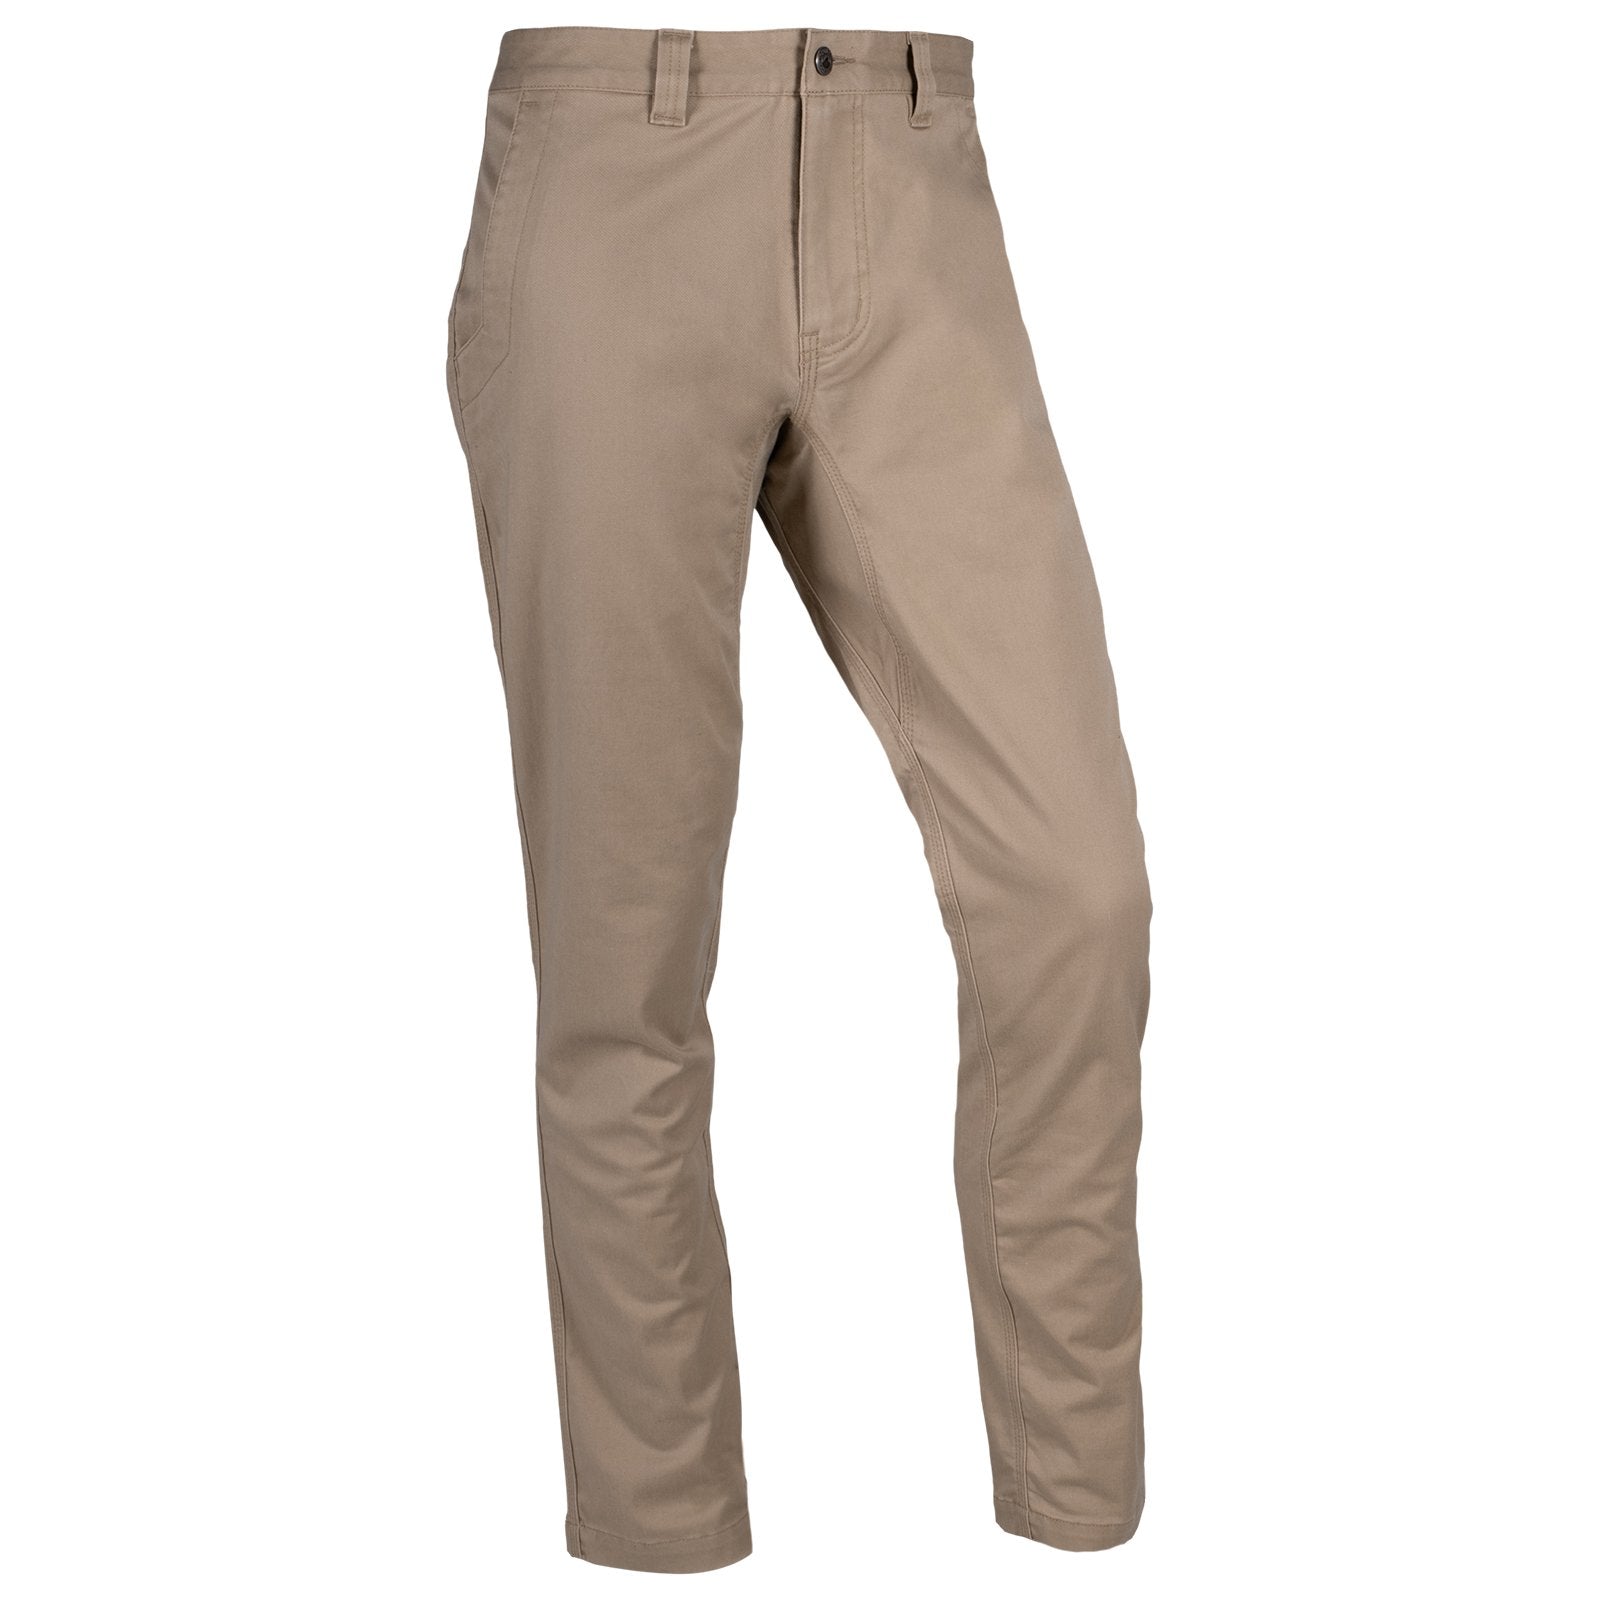 Buy Twills Mens Slim fit Cotton Casual Trouser 36Cream Color at Amazonin